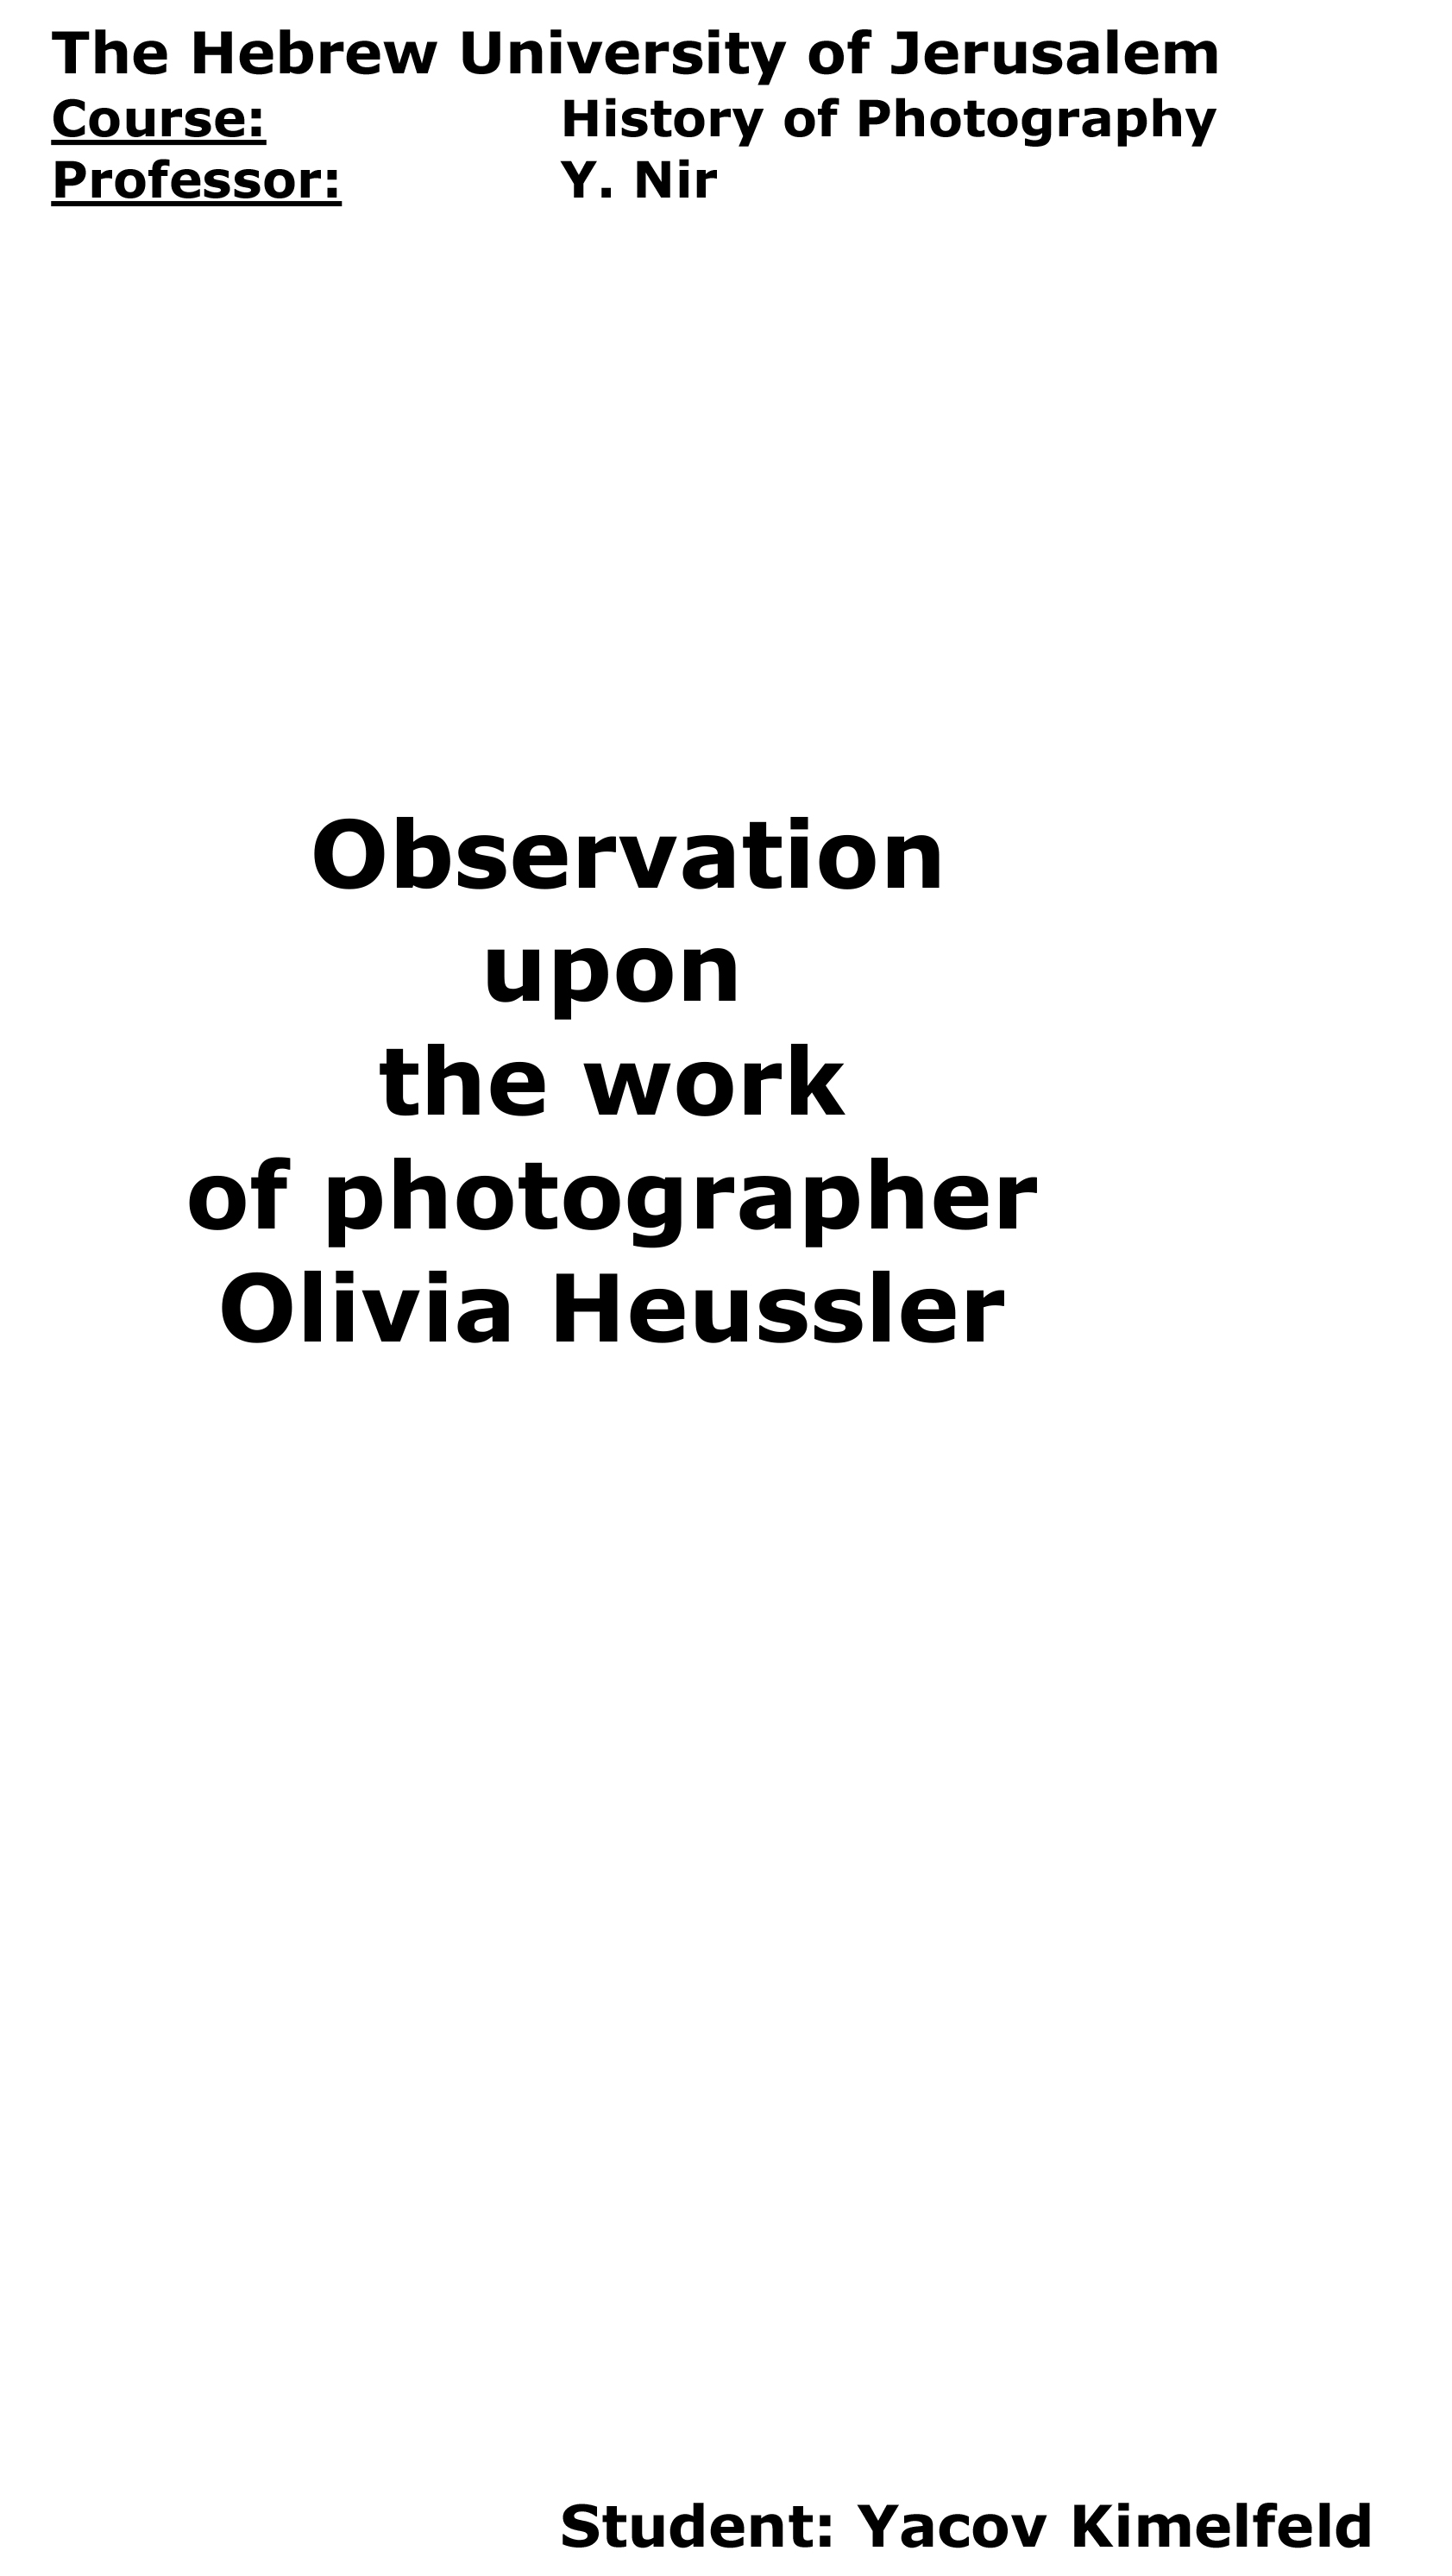 Image of "Observation upon the work of Photographer Olivia Heussler": The Hebrew University of Jerusalem 

Course: History of Photography 

Professor: Y. Nir